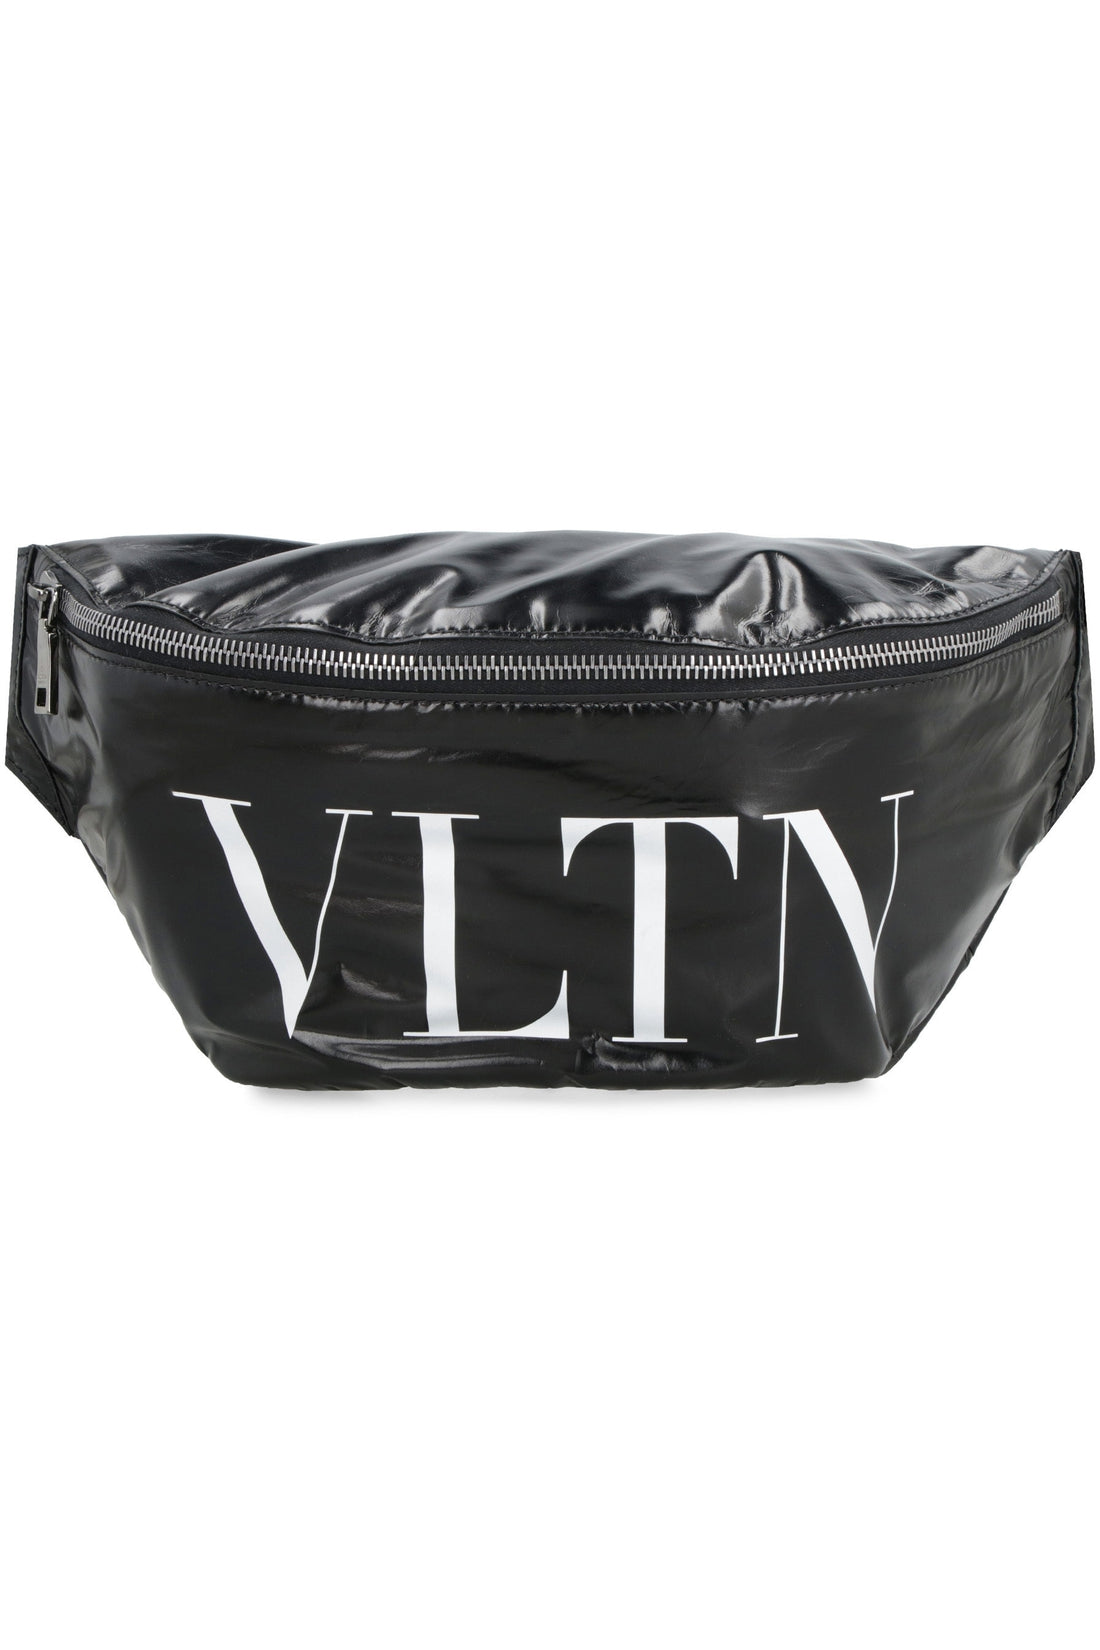 Valentino-OUTLET-SALE-Valentino Garavani - VLTN SOFT leather belt bag-ARCHIVIST